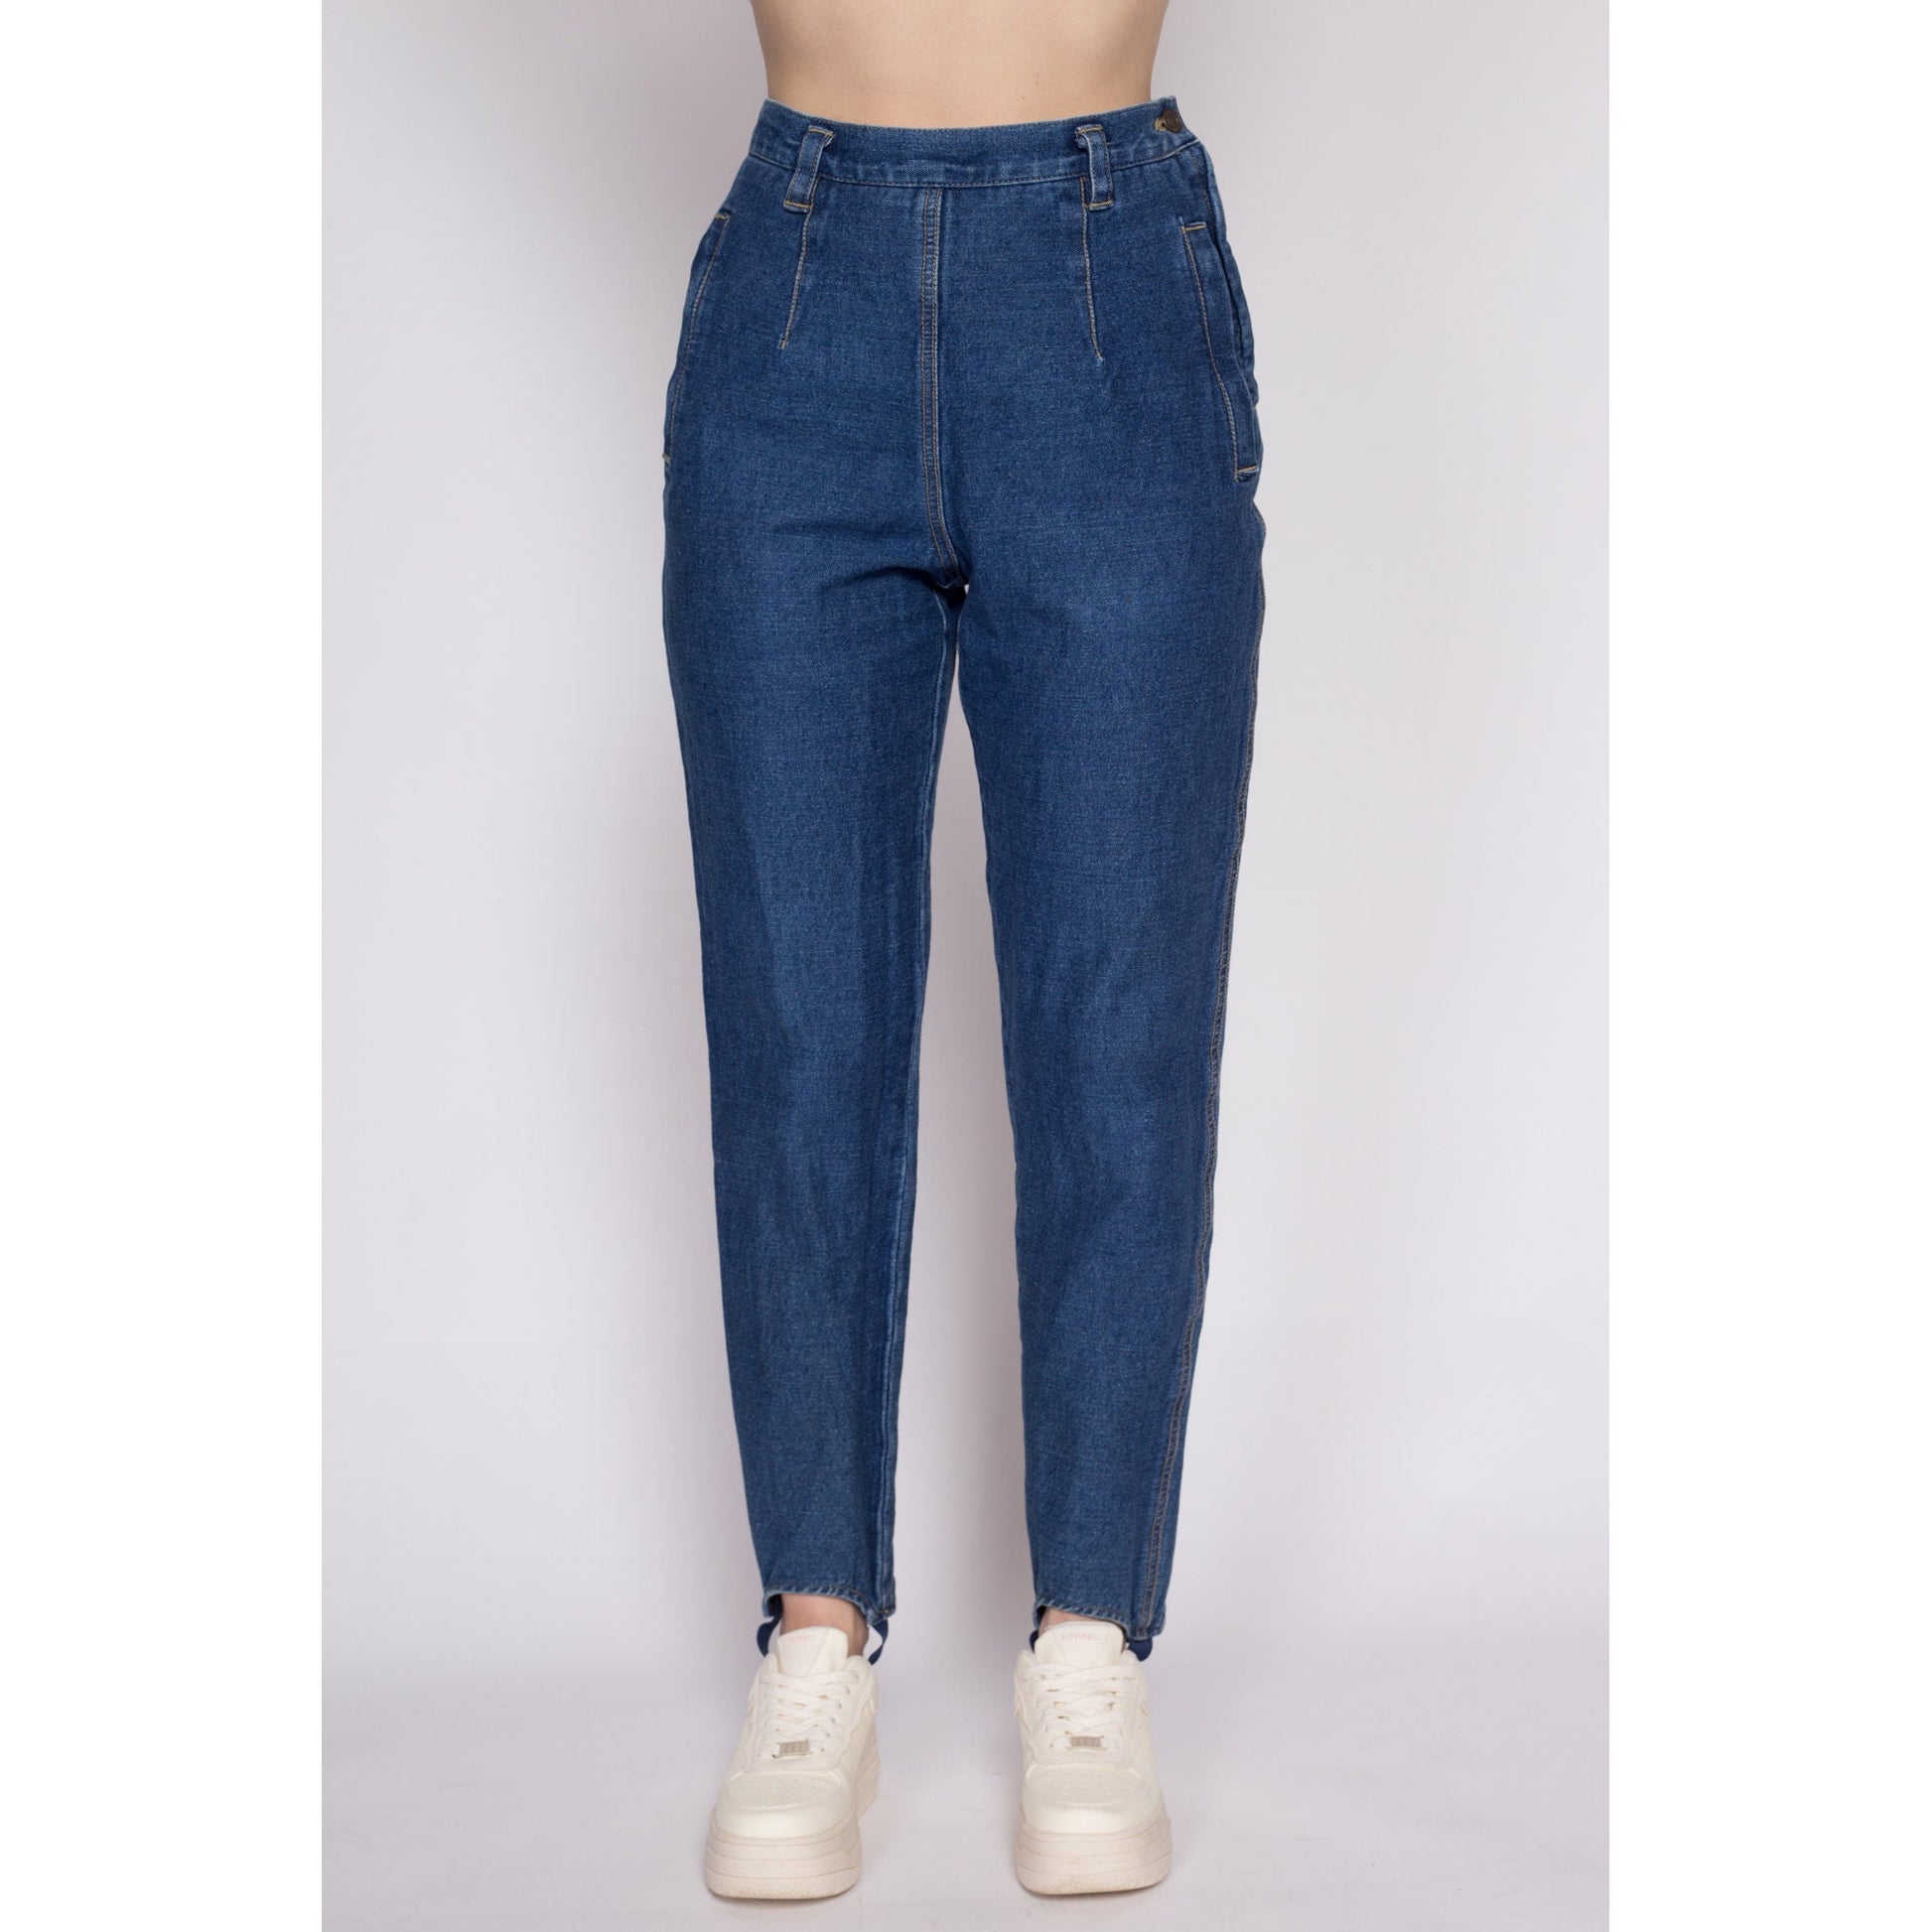 M| 90s Lizwear Stirrup Side Zip Jeans - Medium, 28" | Vintage High Waisted Dark Wash Stretchy Slim Ankle Jeans